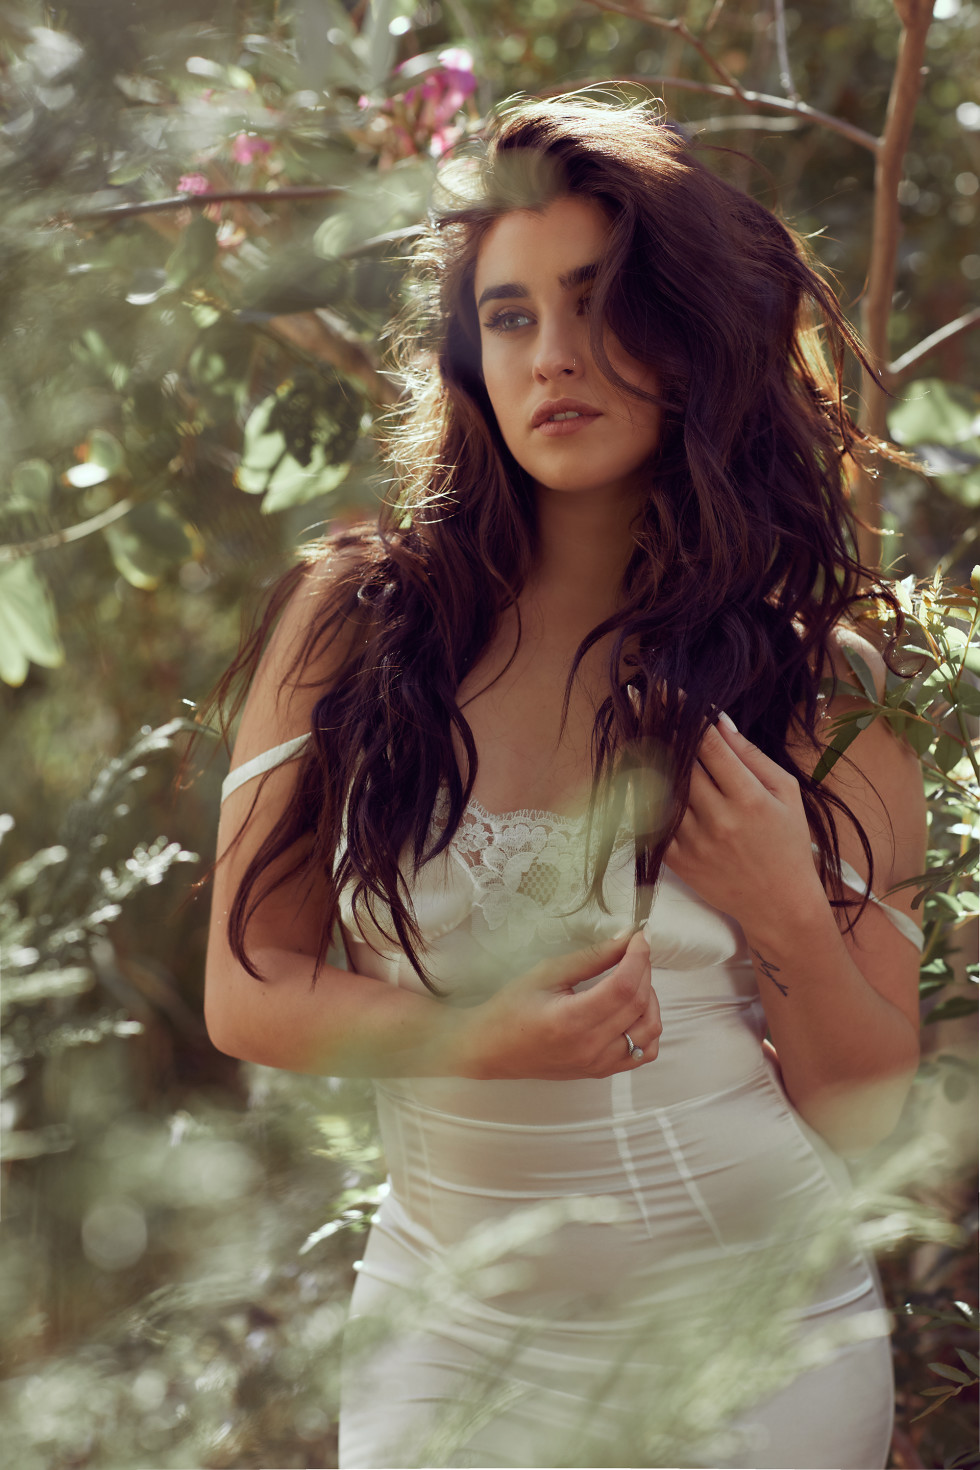 Lauren Jauregui Women Singer Brunette Young Woman Outdoors Plants Nature White Dress 980x1470